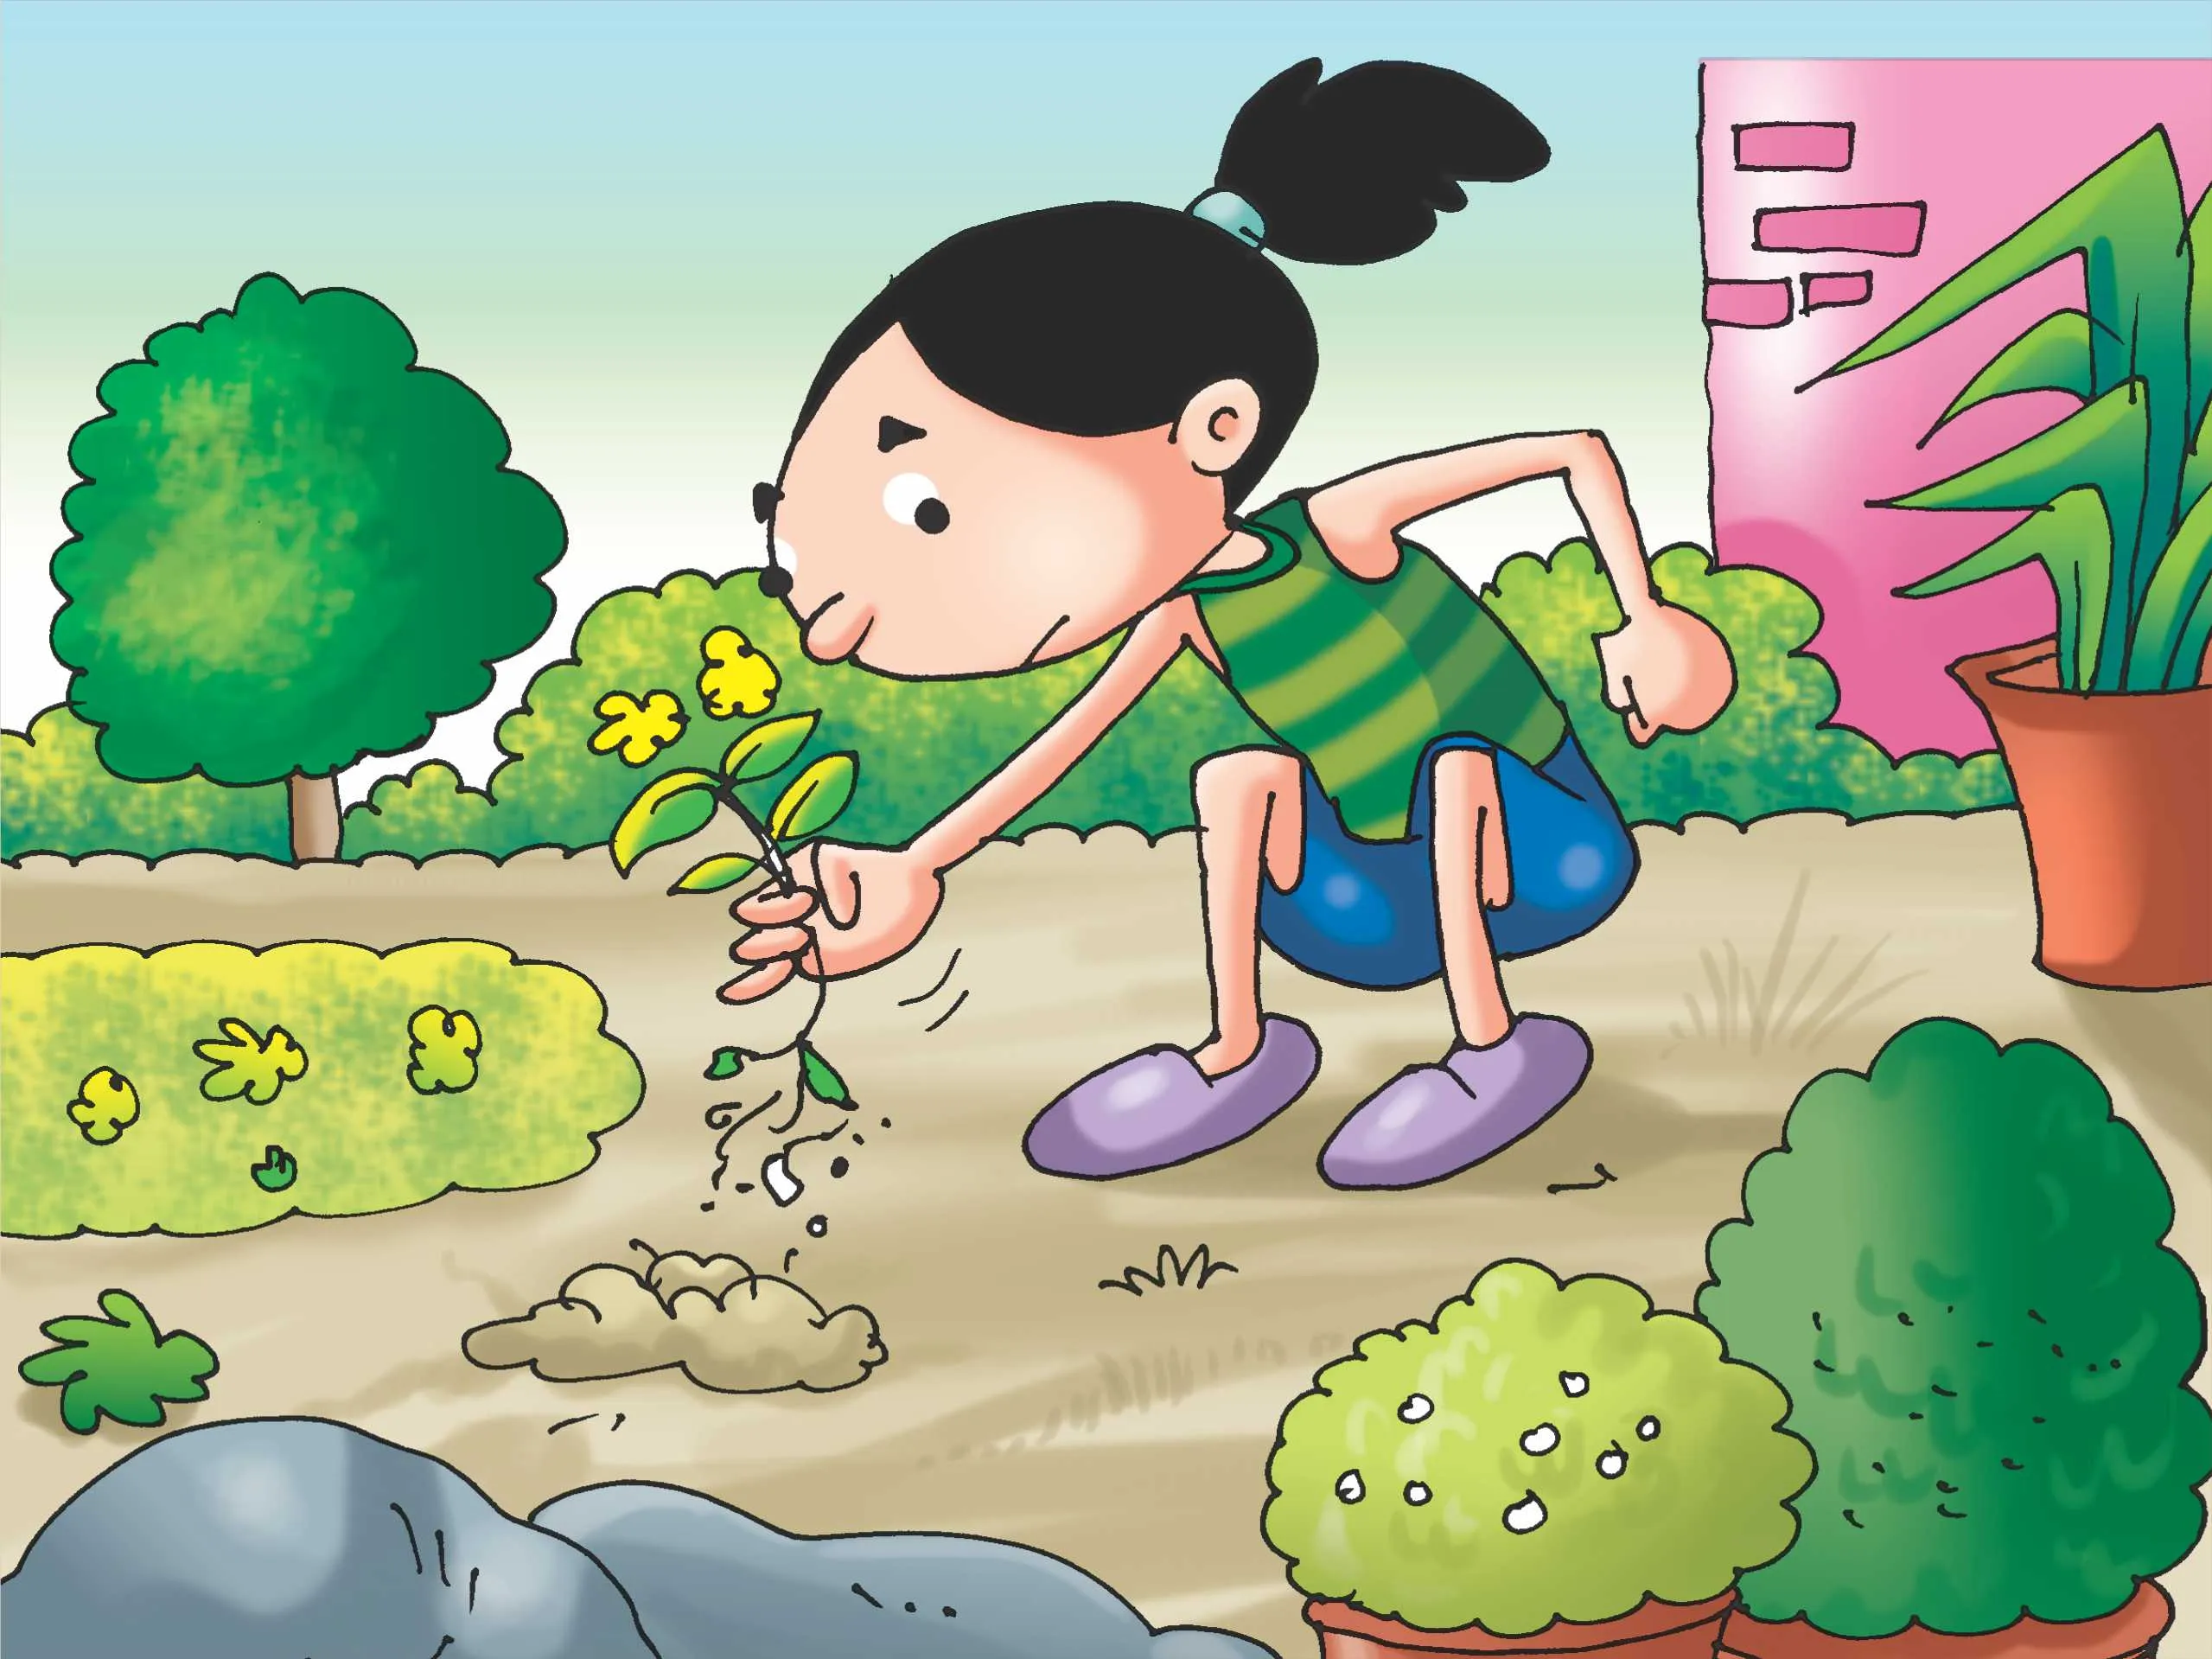 Girl plucking the plant cartoon image